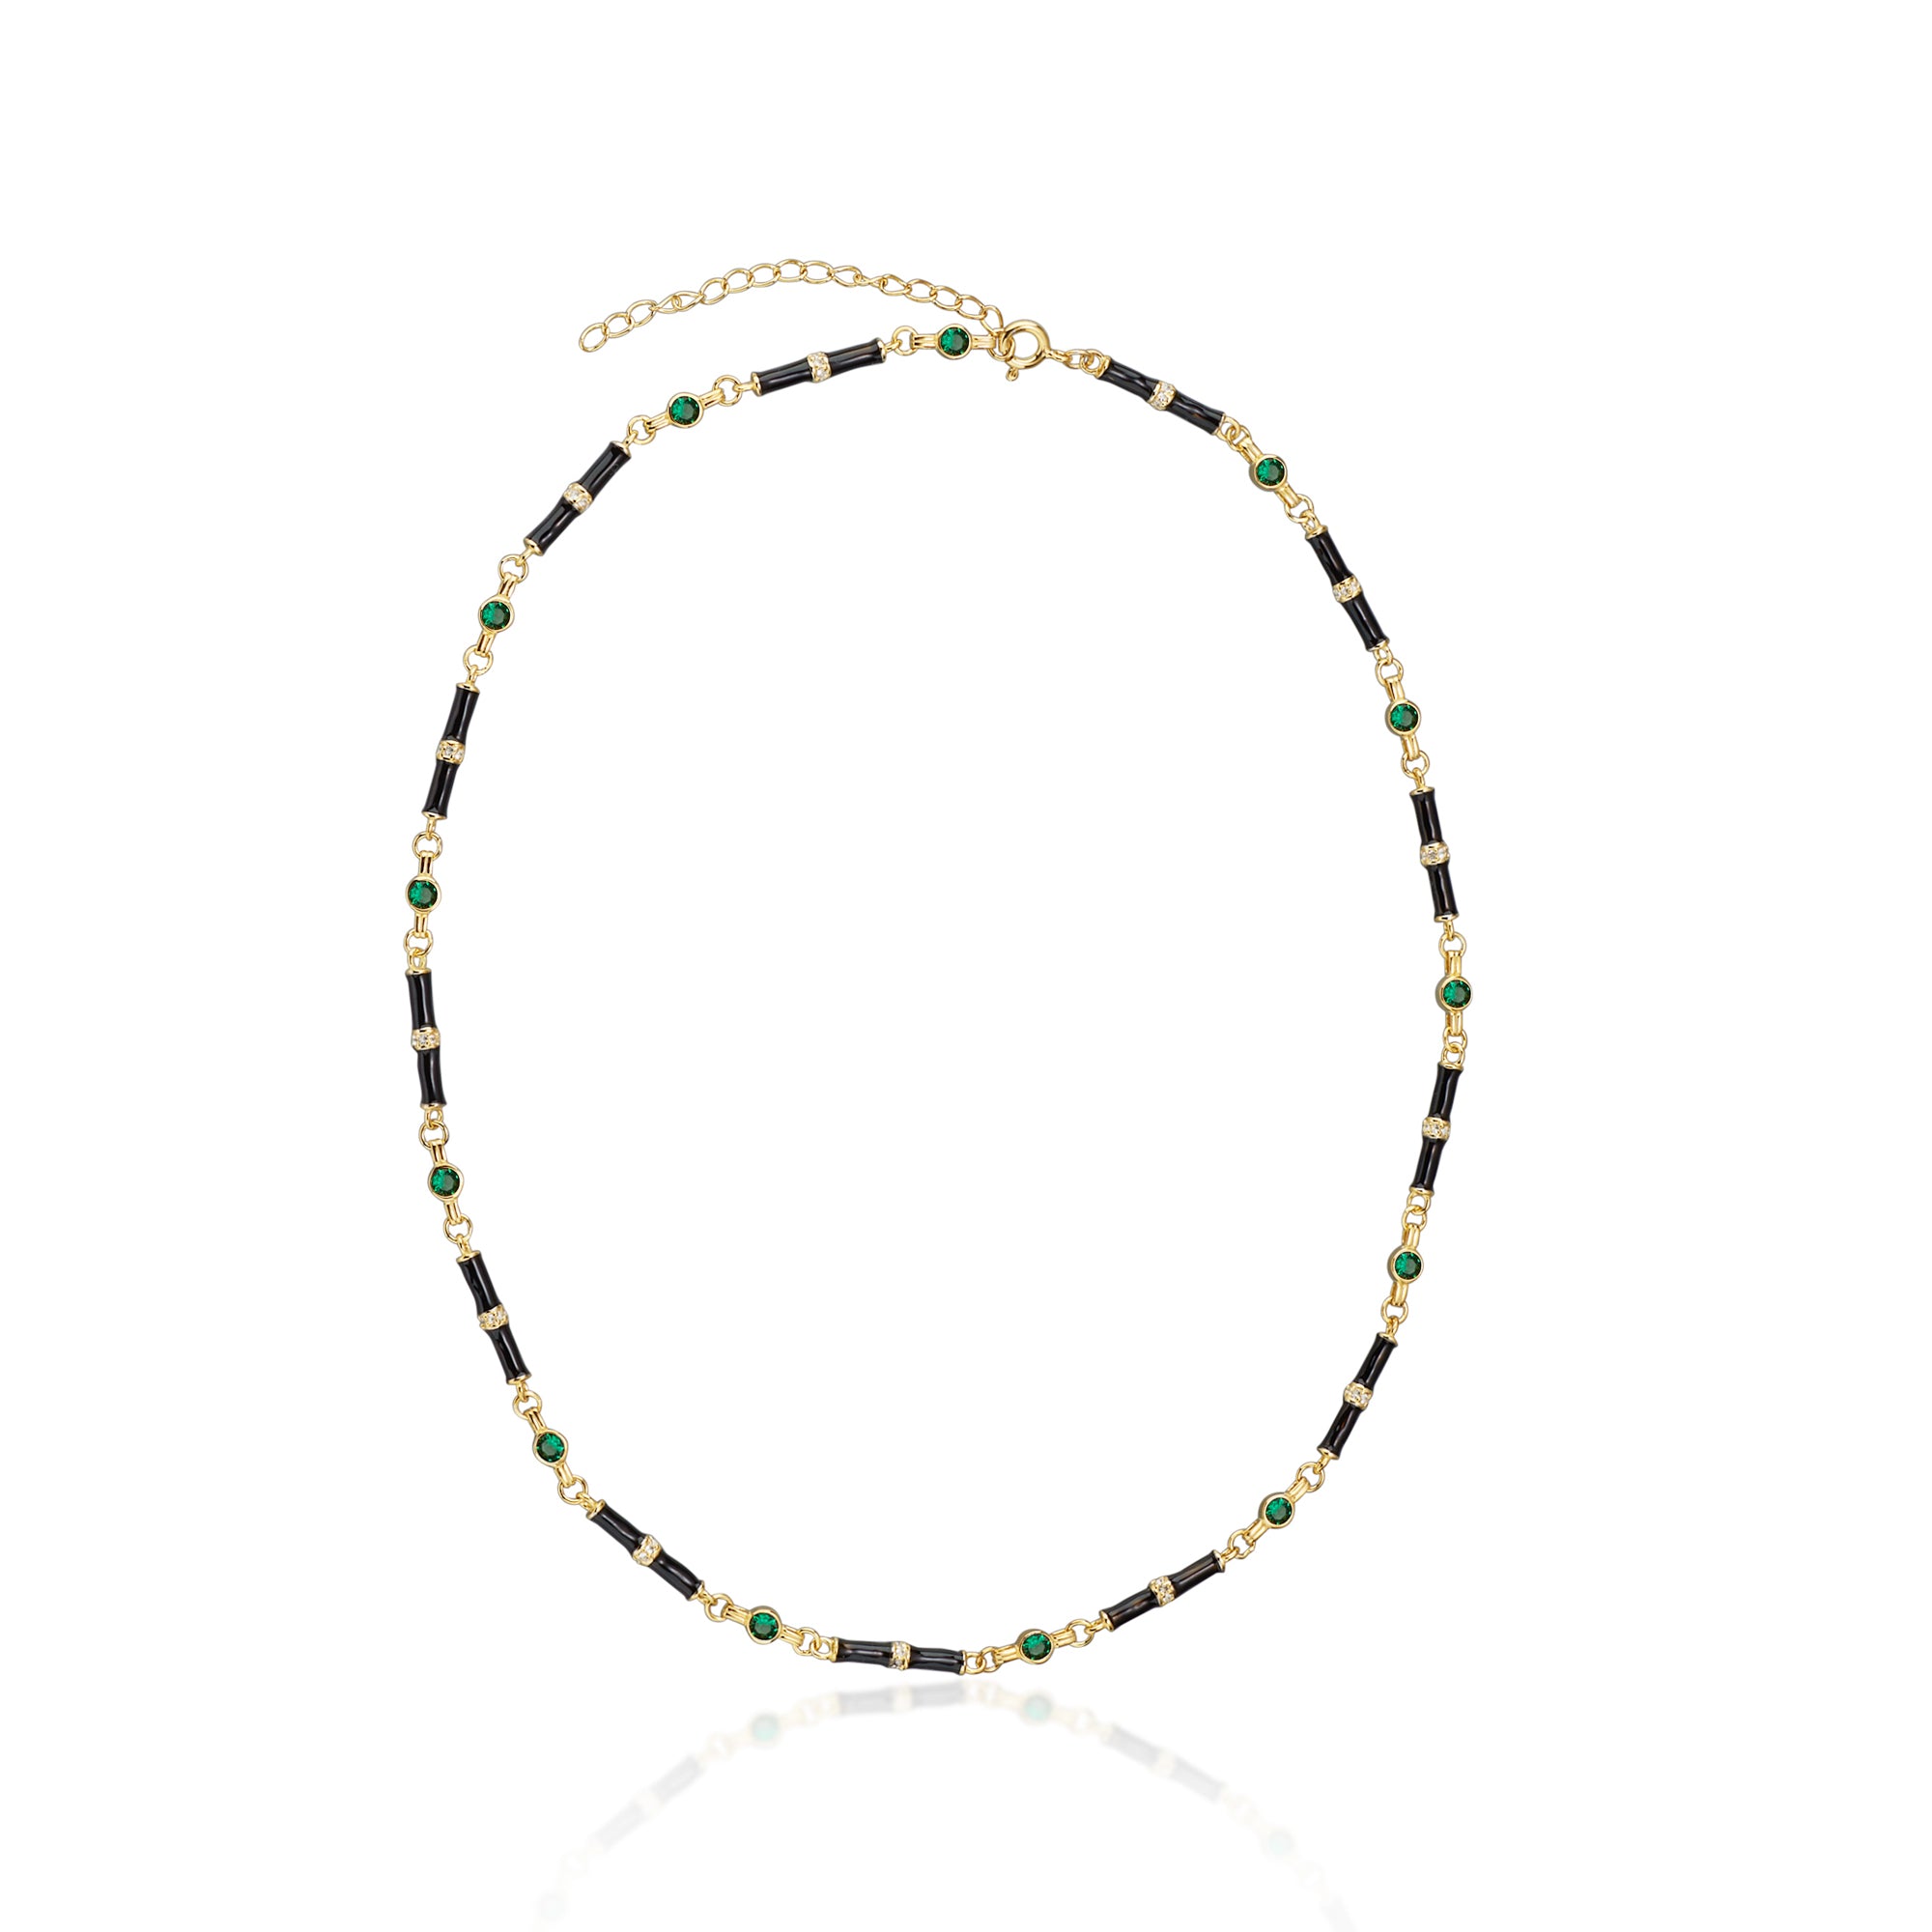 Marlowe Black Enamel Necklace with Emerald Green Stone